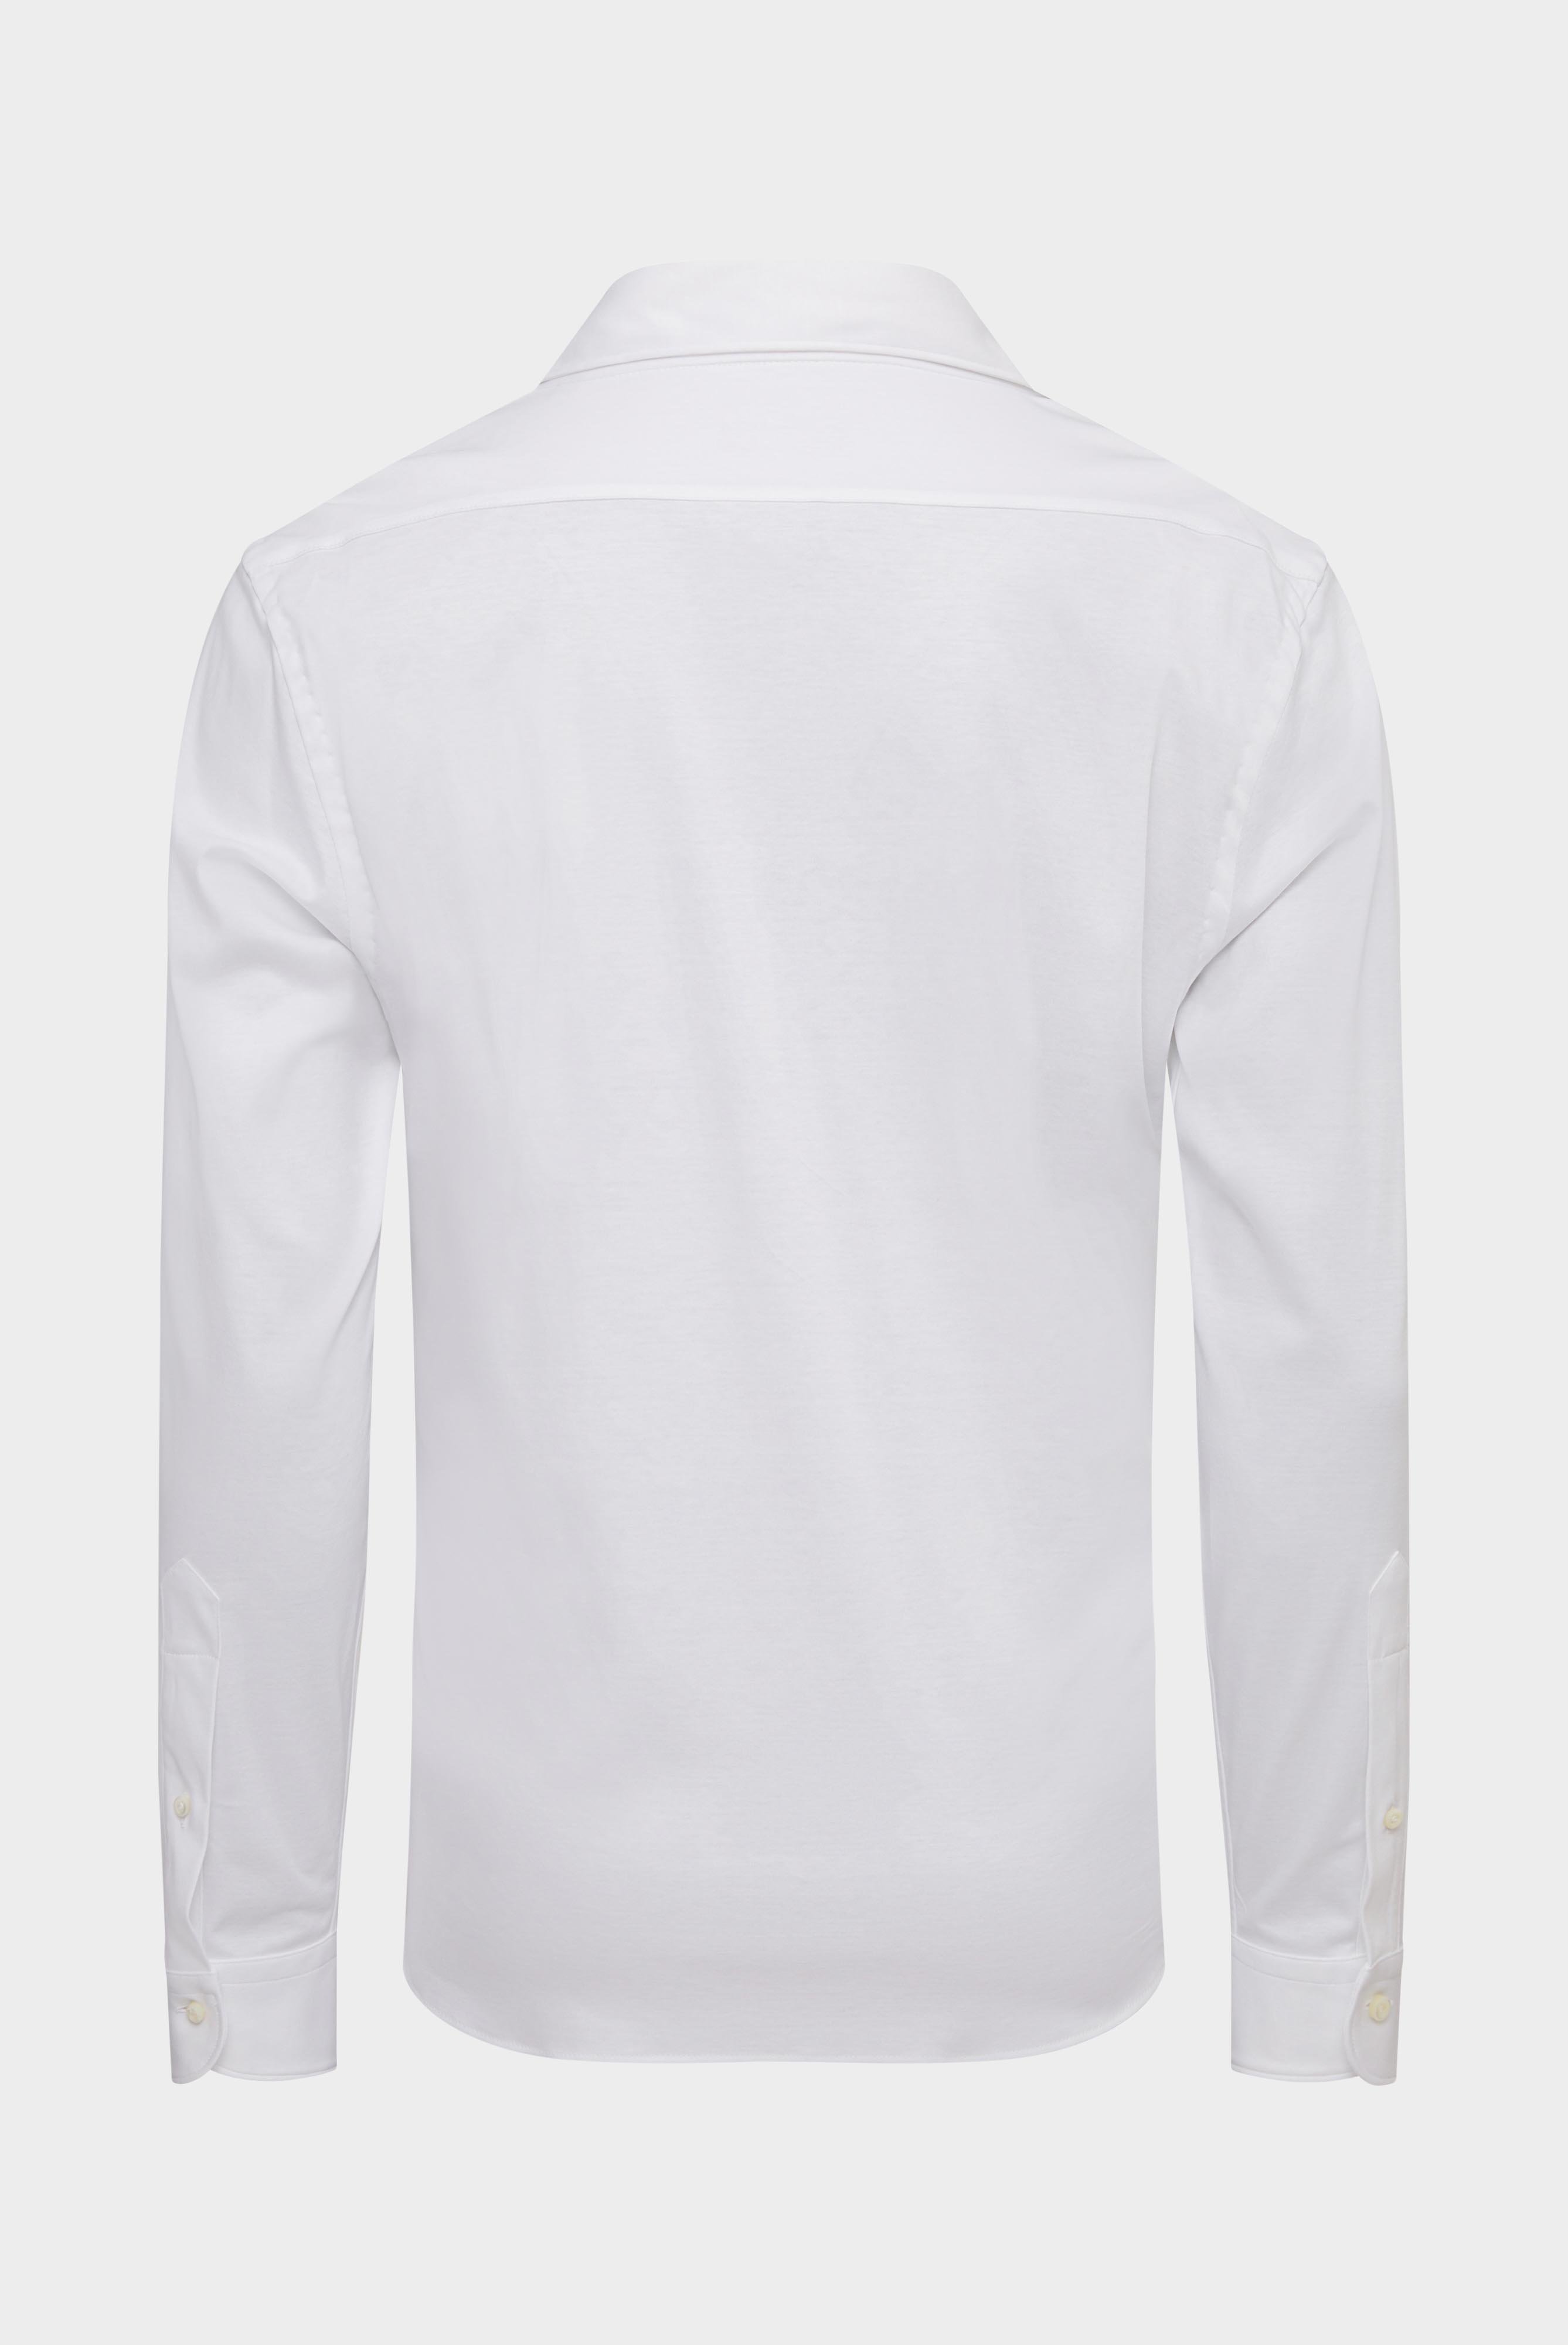 Easy Iron Shirts+Swiss Cotton Jersey Shirt Tailor Fit+20.1683.UC.180031.000.XXL